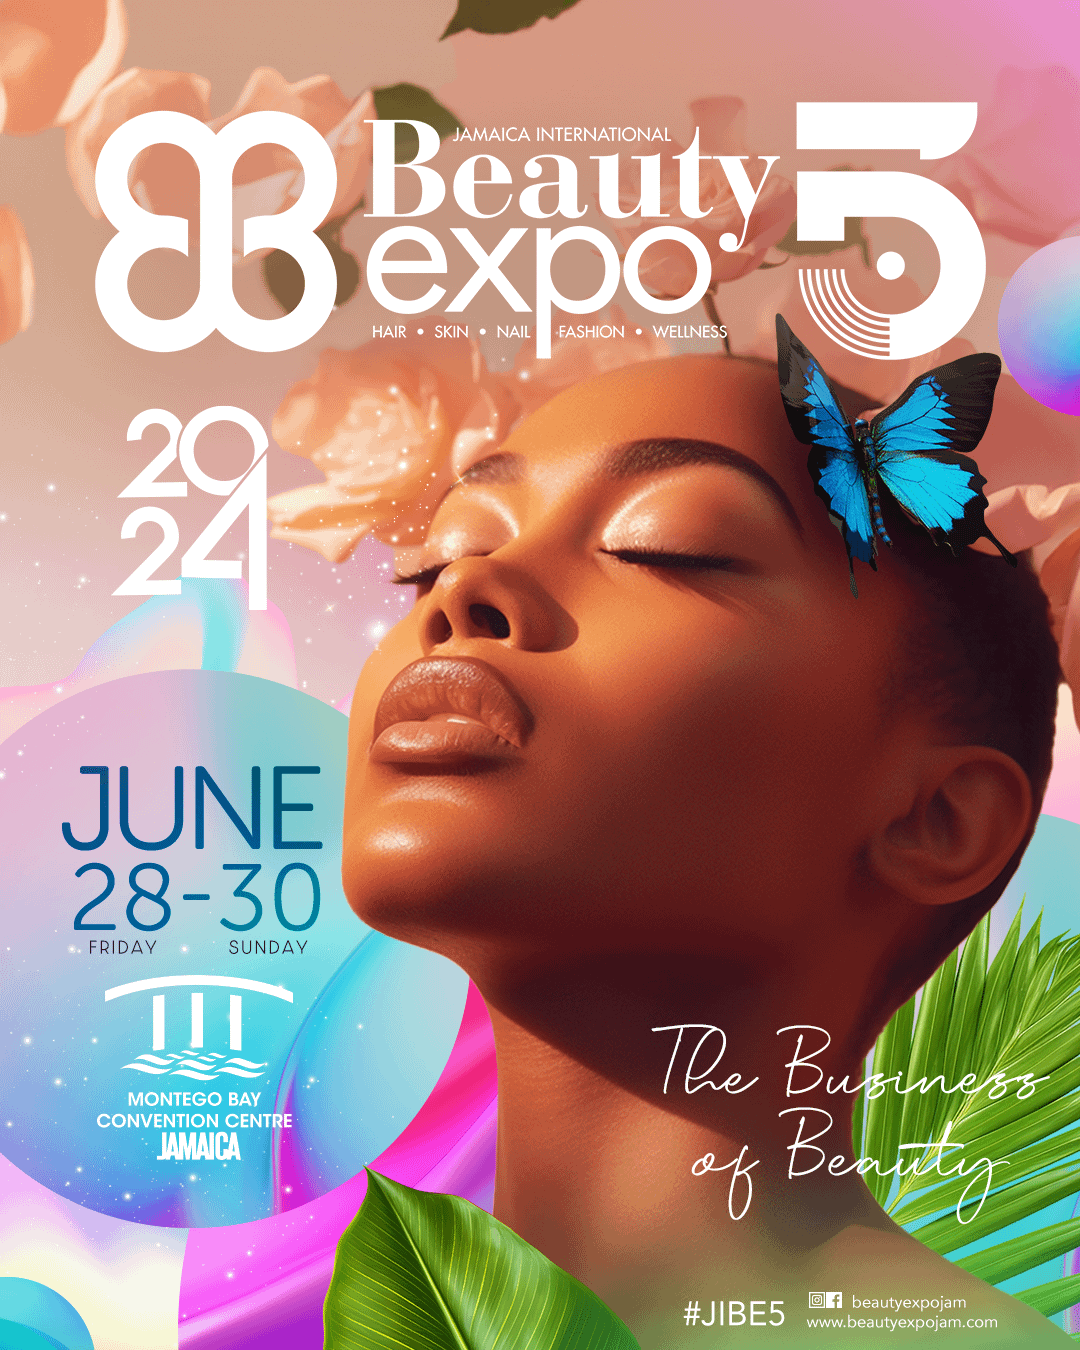 Jamaica International Beauty Expo